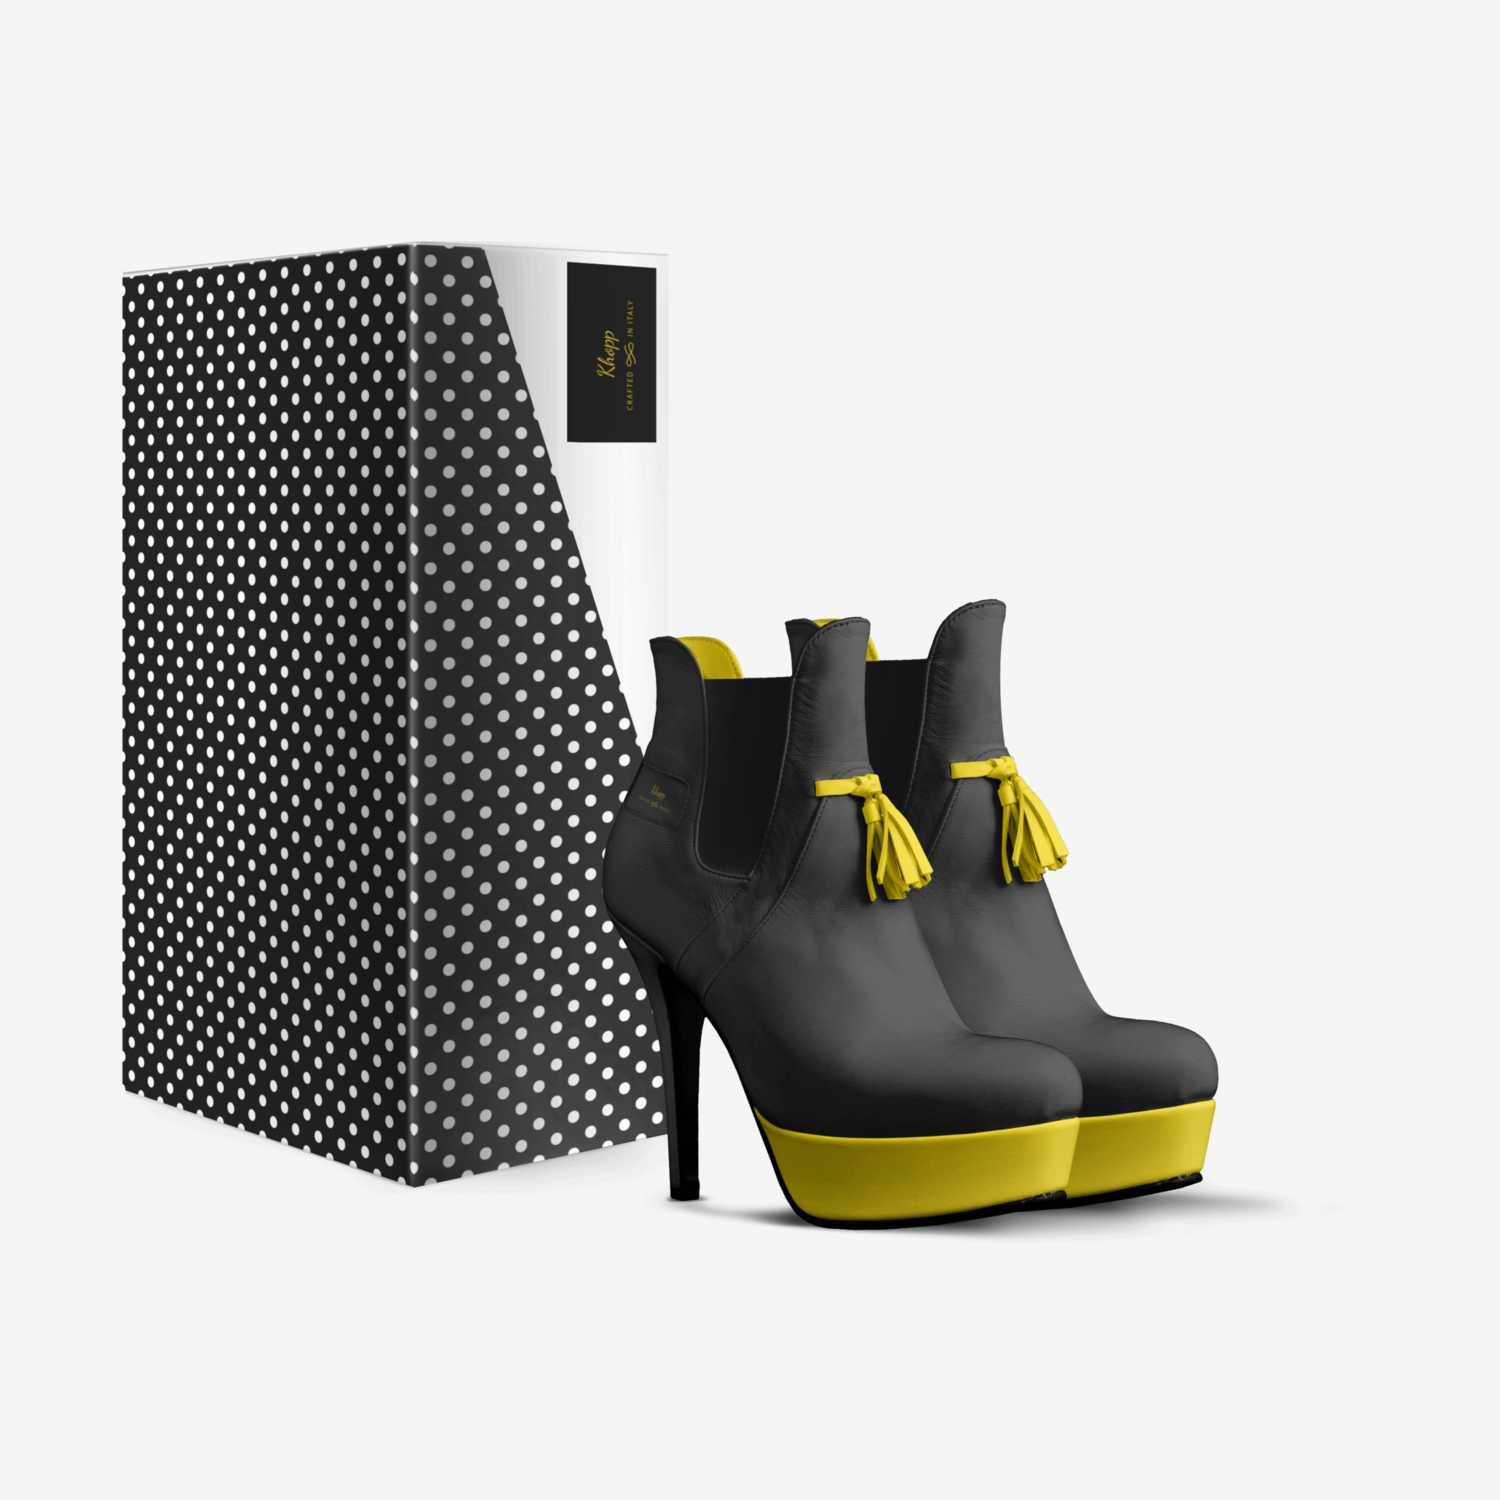 Khopp custom made in Italy shoes by Tyrone Martin | Box view